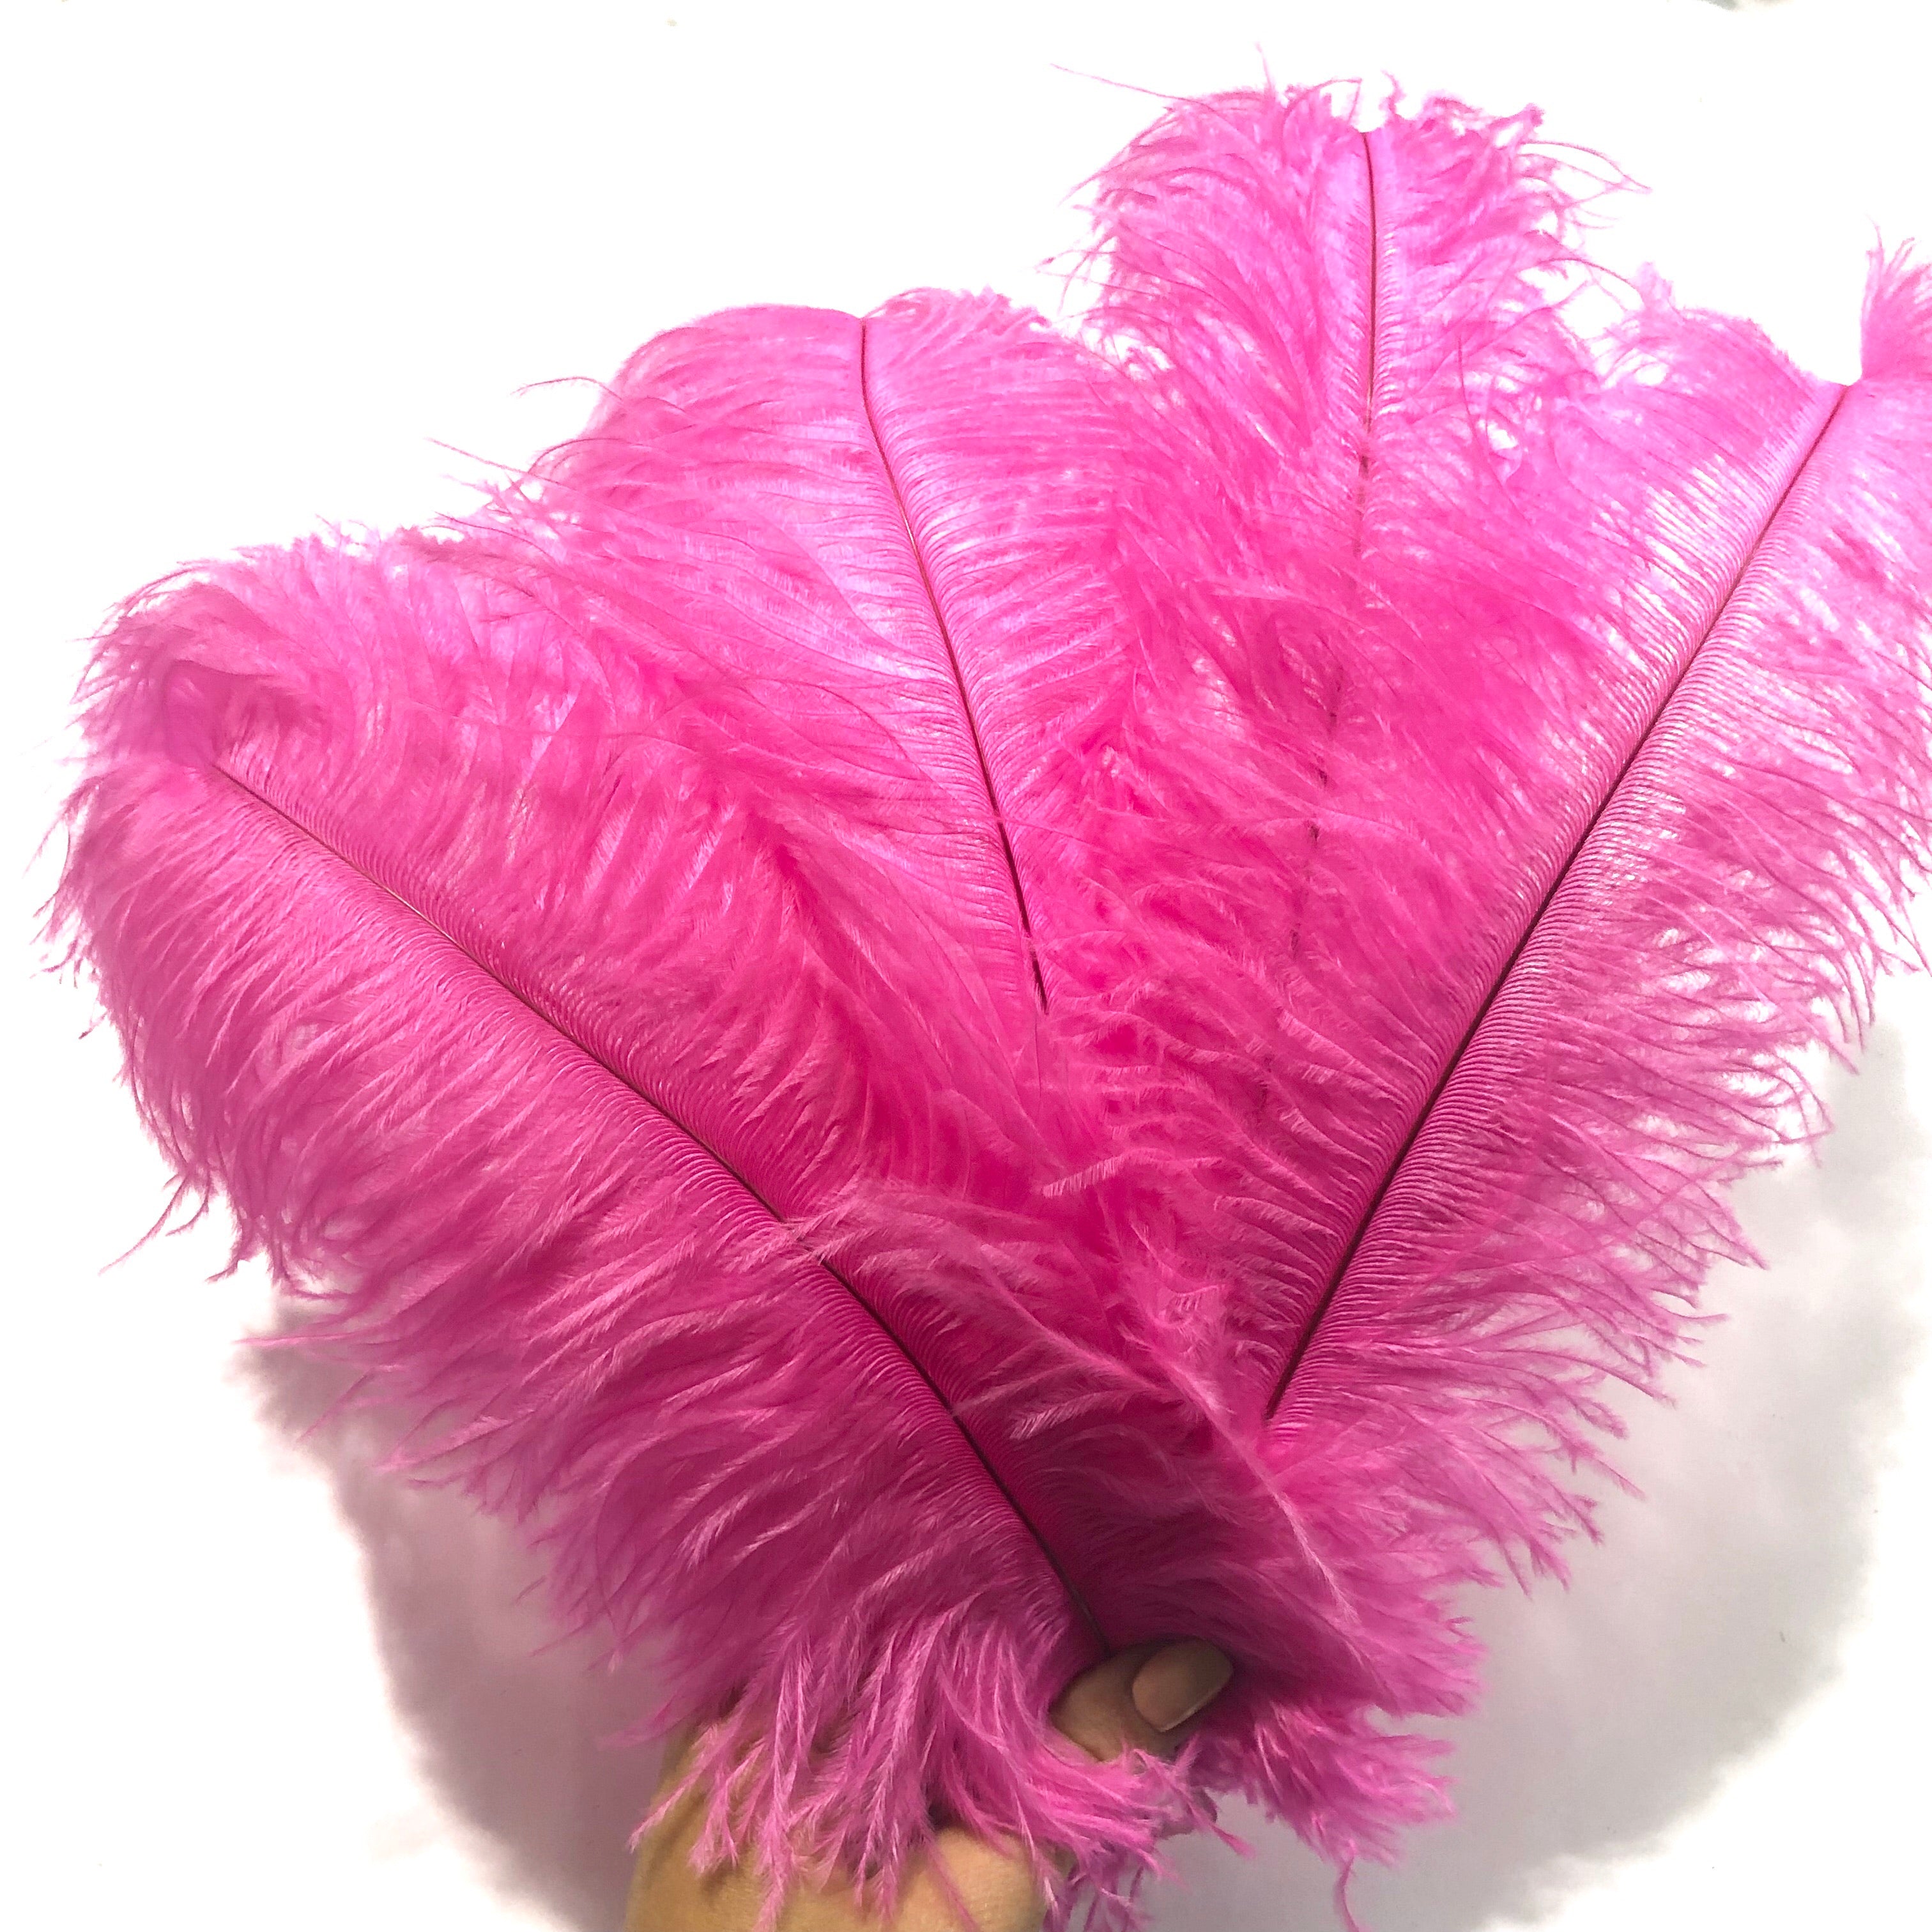 Ostrich Blondine Feather 25-40cm x 5 pcs - Hot Pink ((SECONDS))